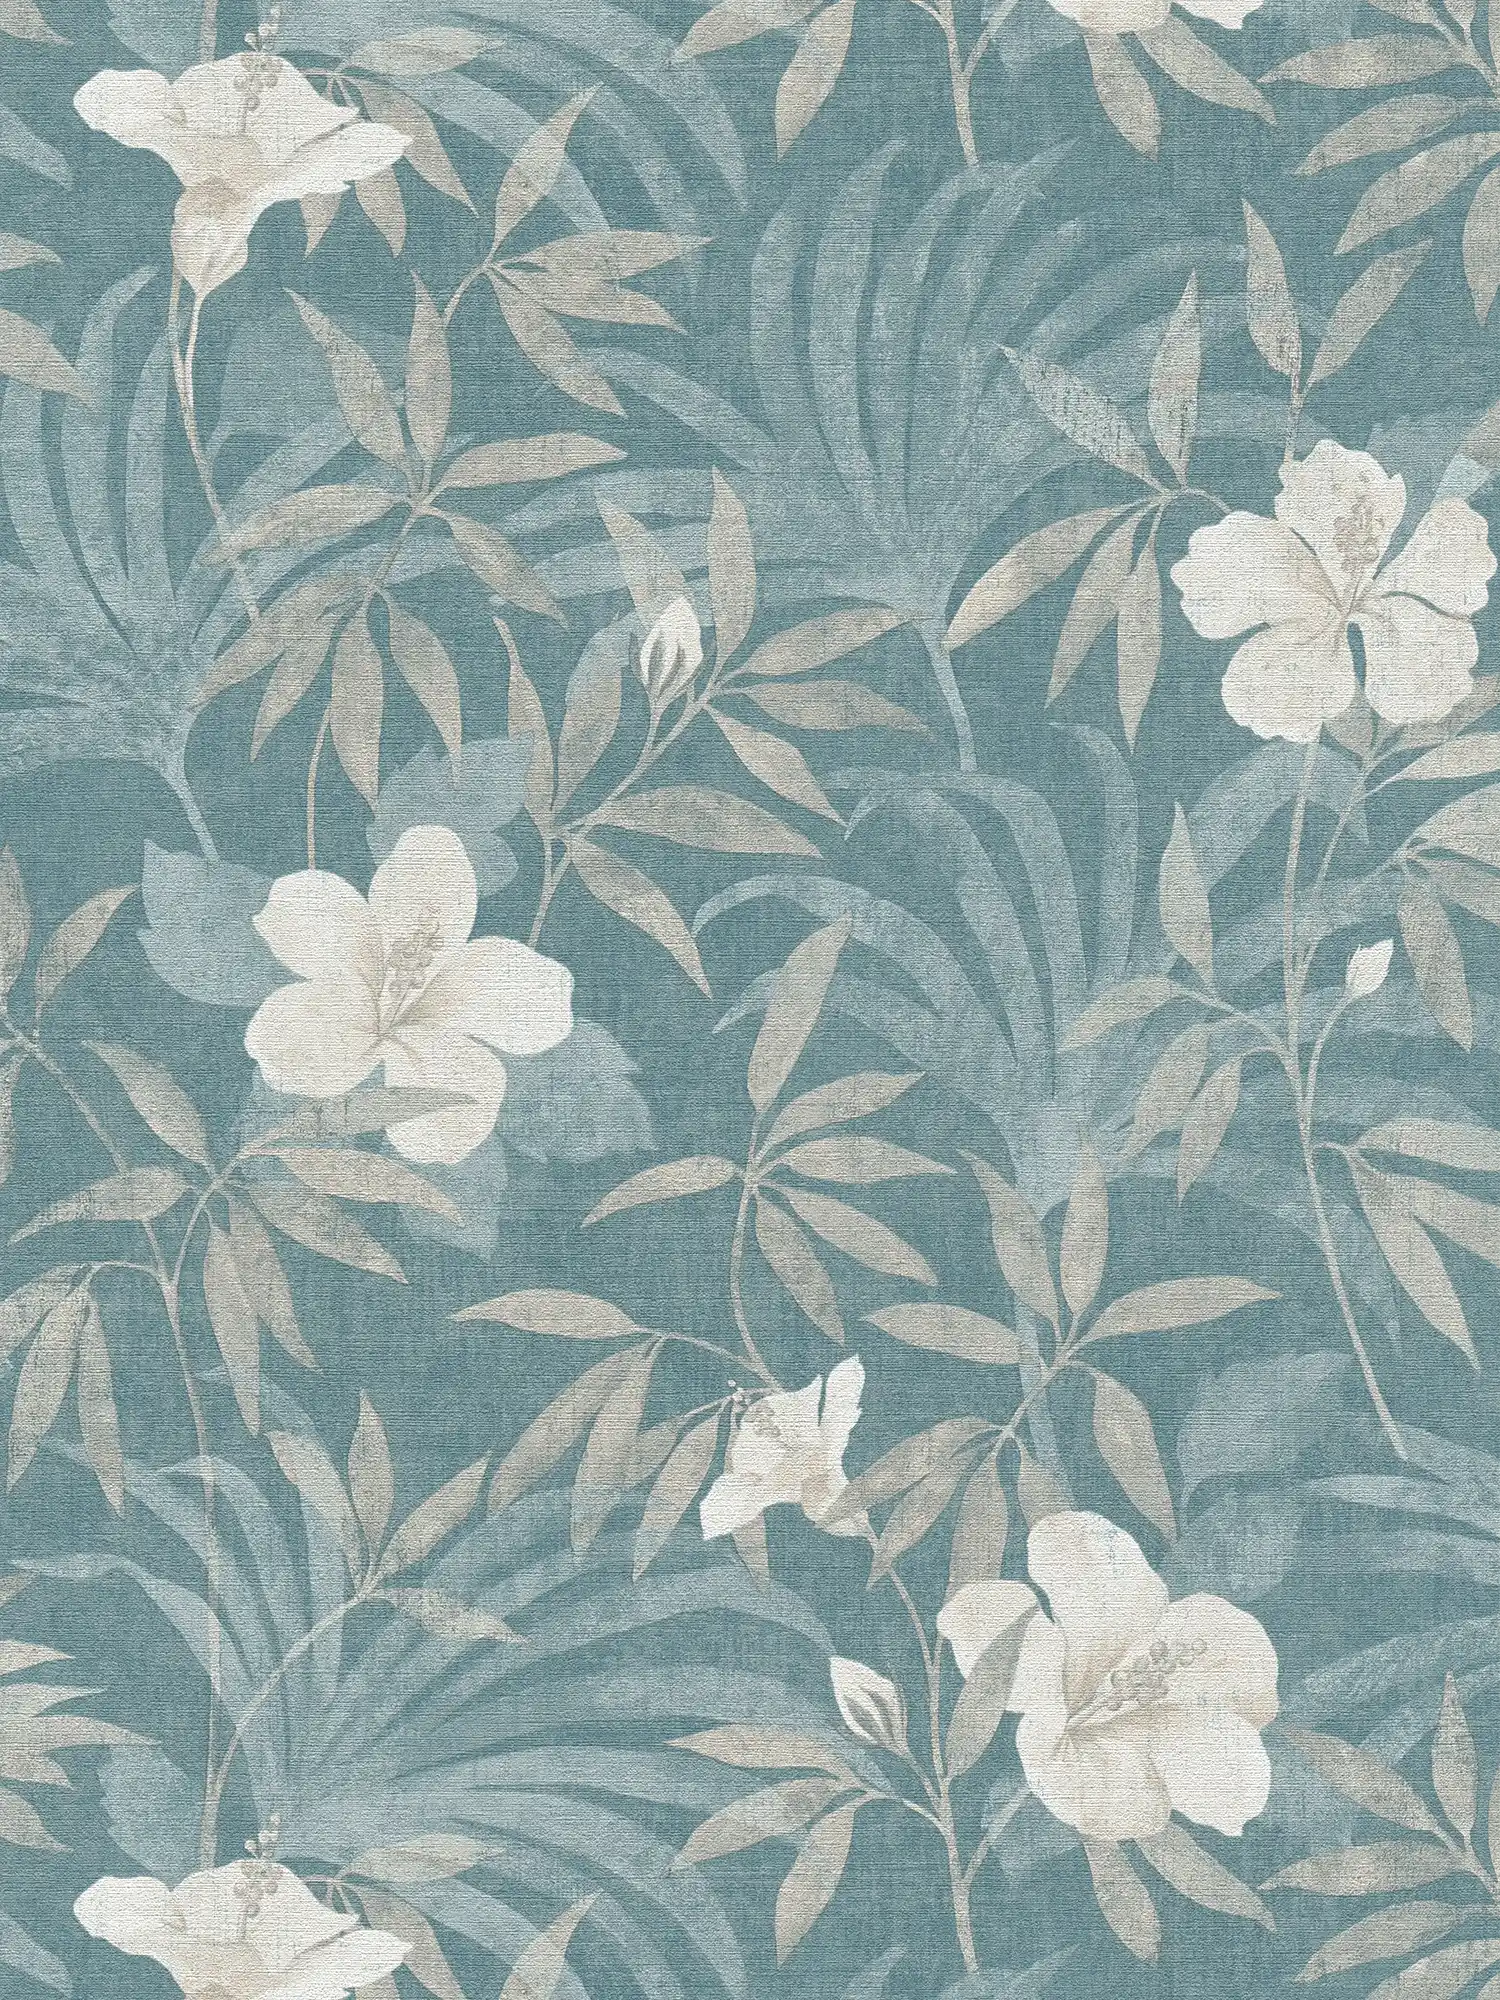 Tapete Petrol Dschungel Muster mit Hibiskus Blüten – Beige, Blau
